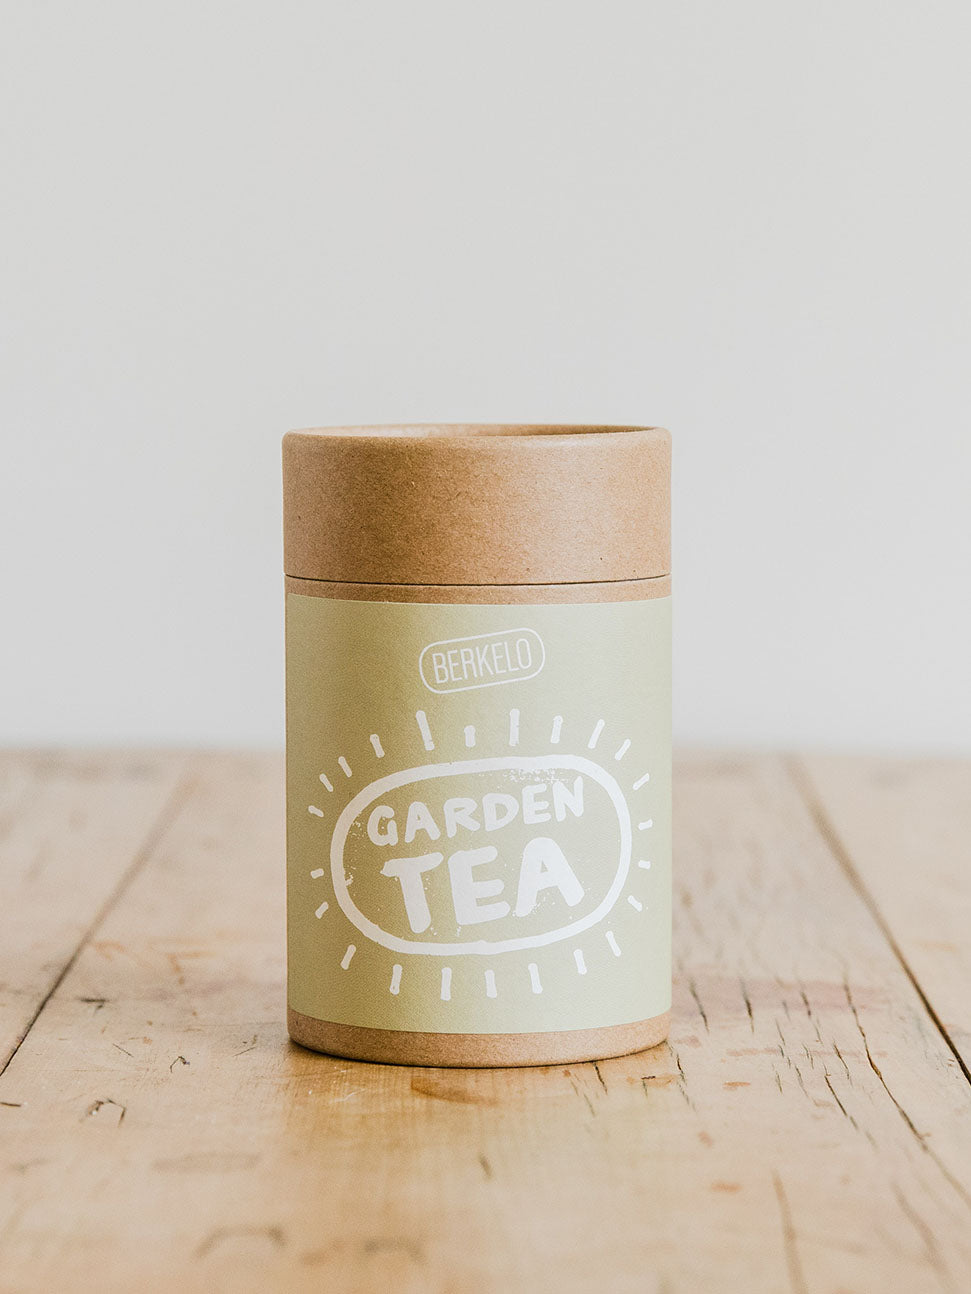 Berkelo Garden Tea